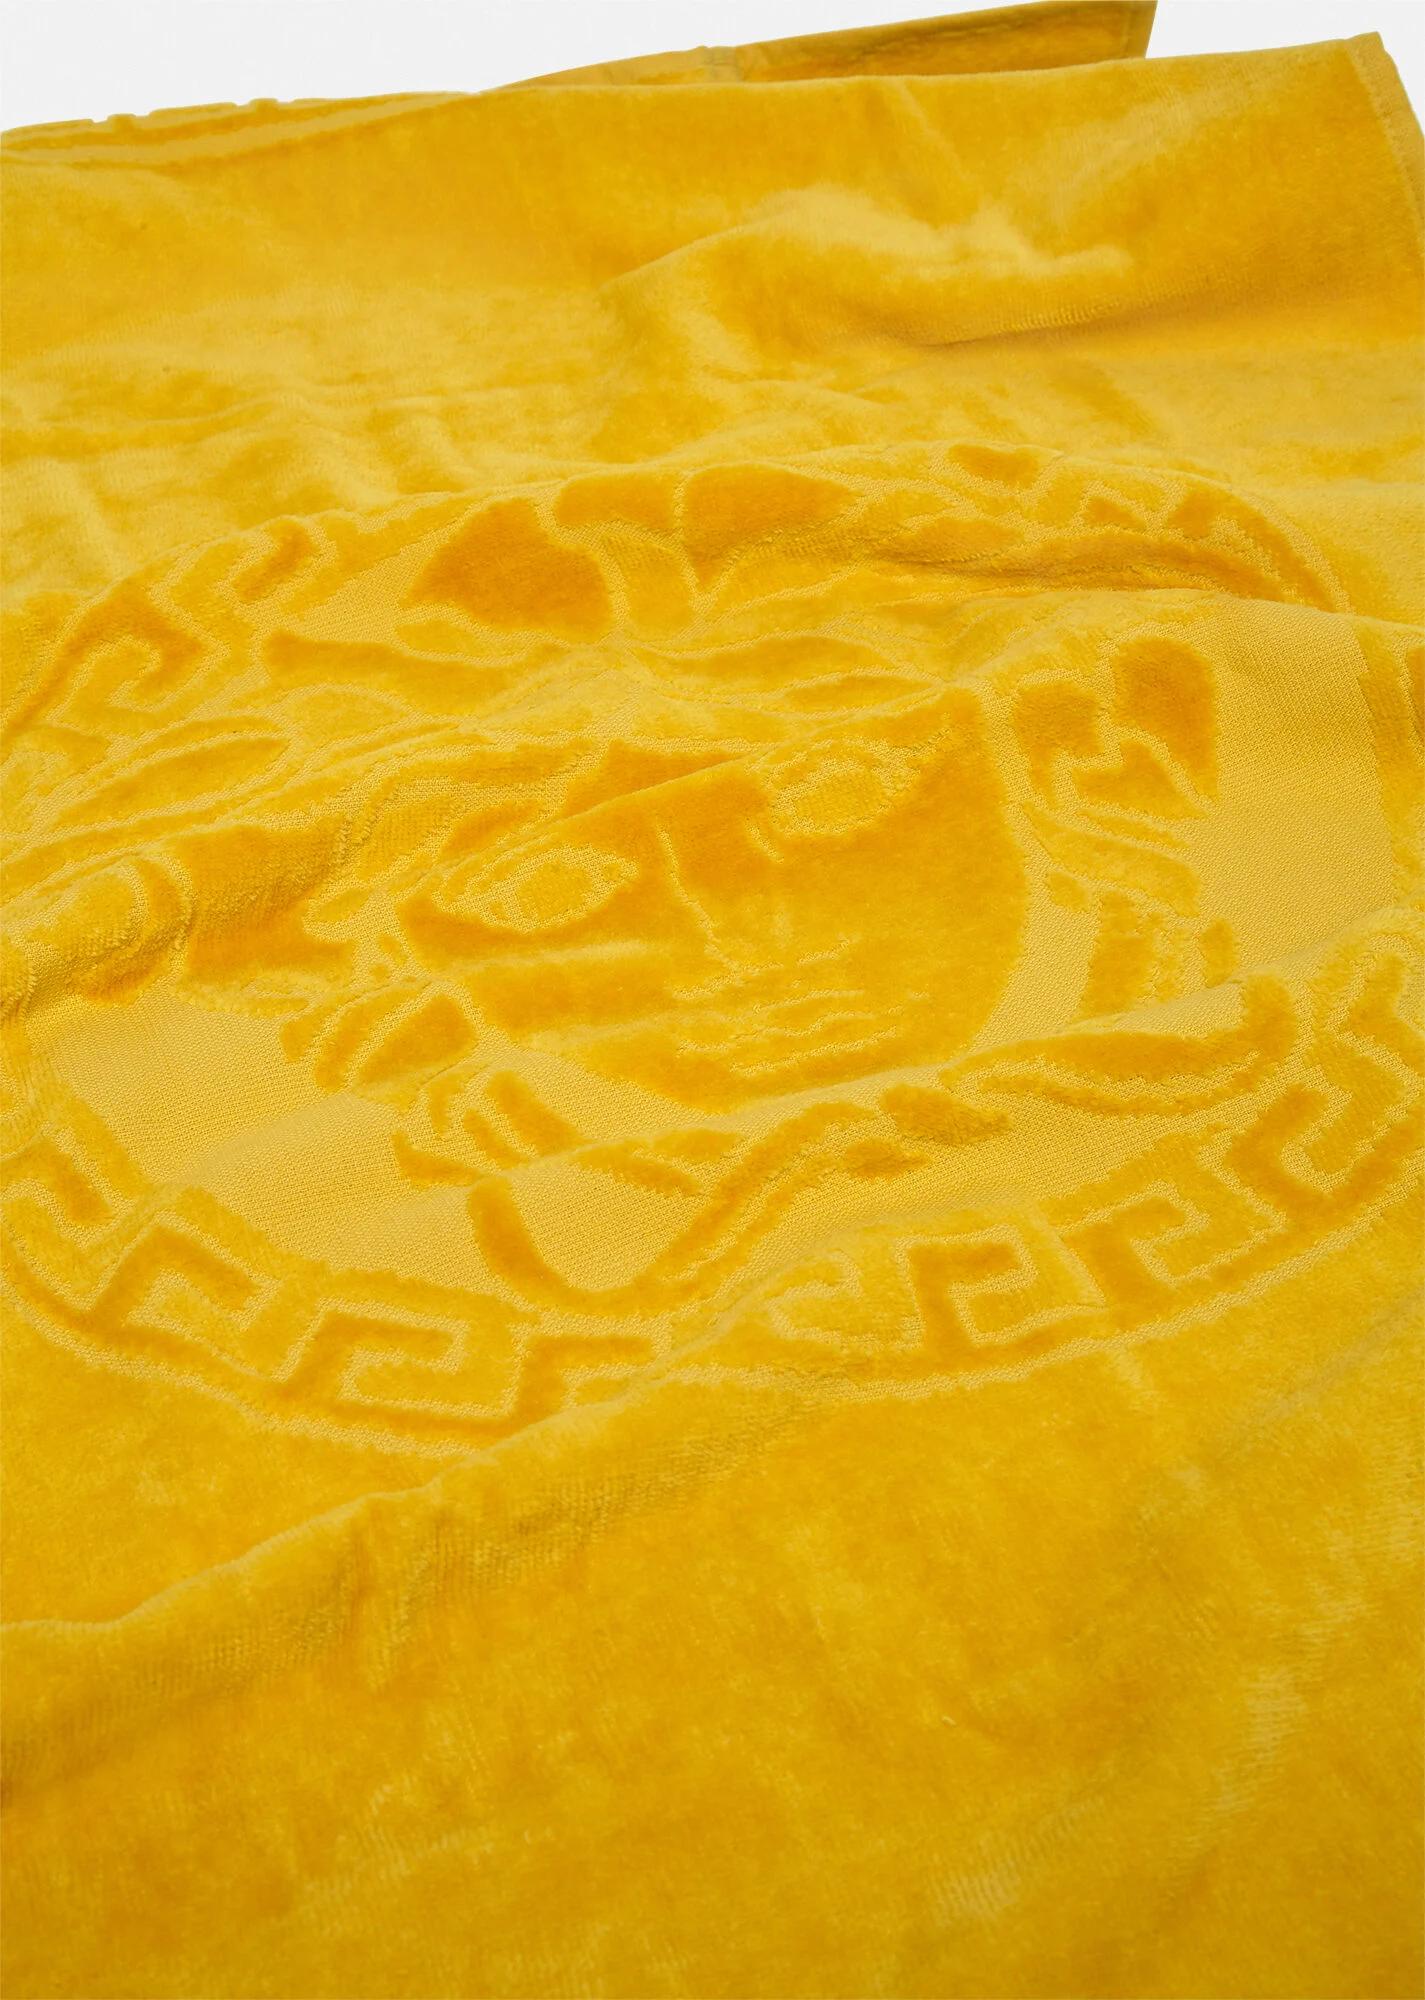 Italian Versace Medusa Gold Hand Towel, Deep Yellow, Italy